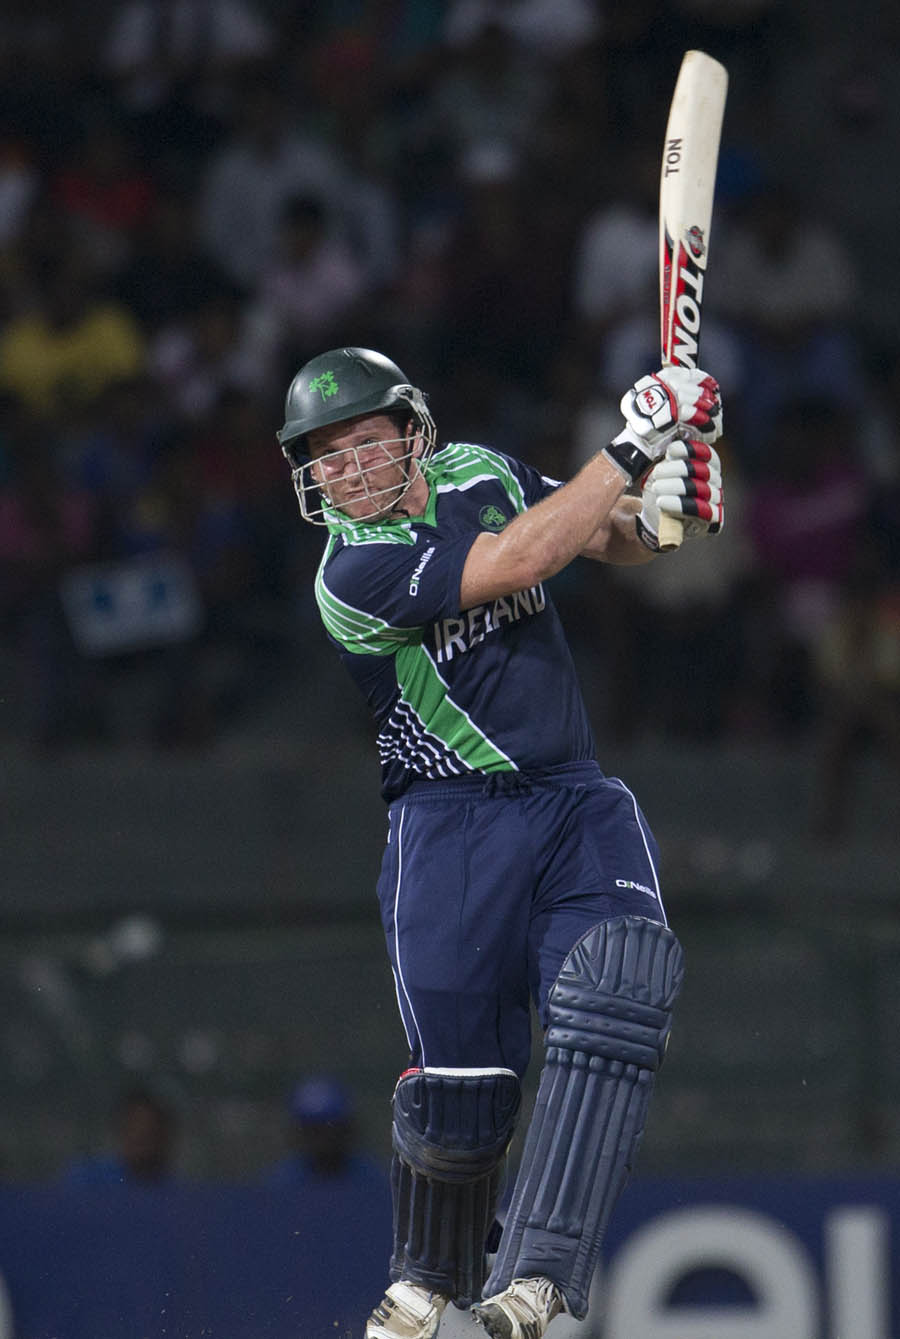 Ireland's Niall O Brien bats during a ICC Twenty20